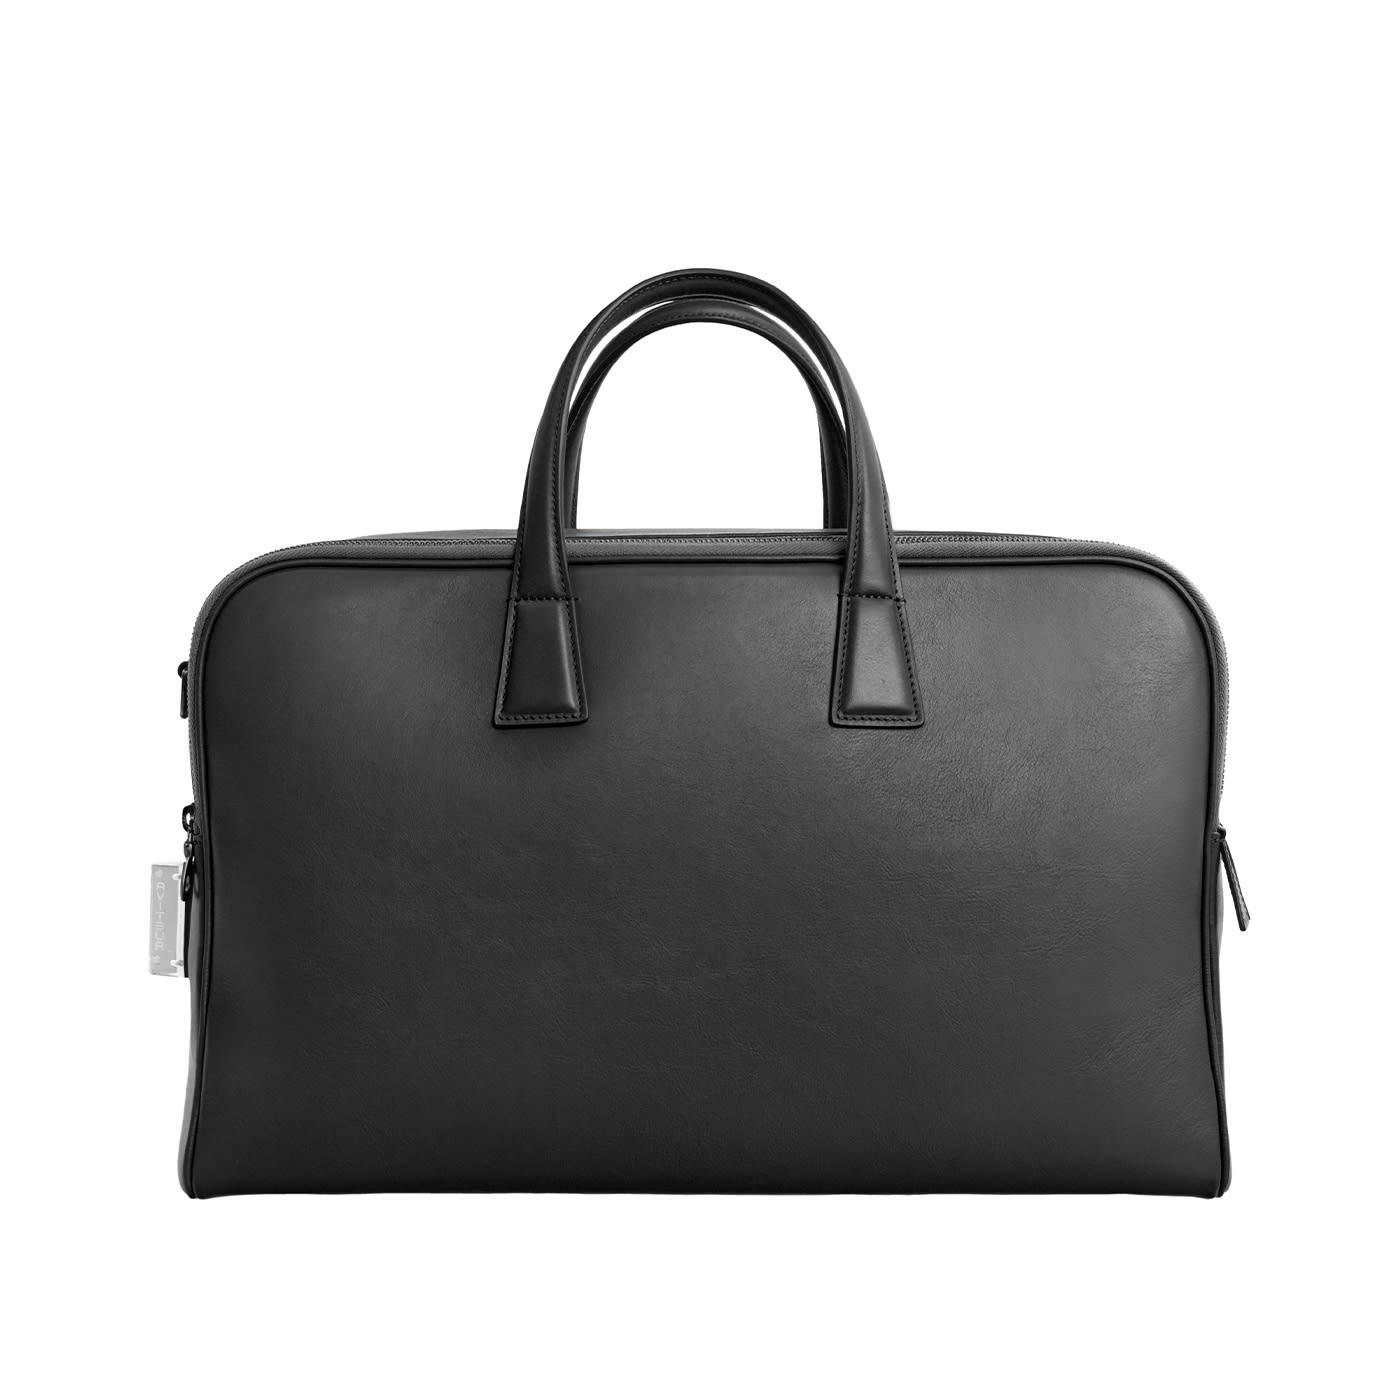 Black Cristallo Mini Weekend Bag - Aviteur